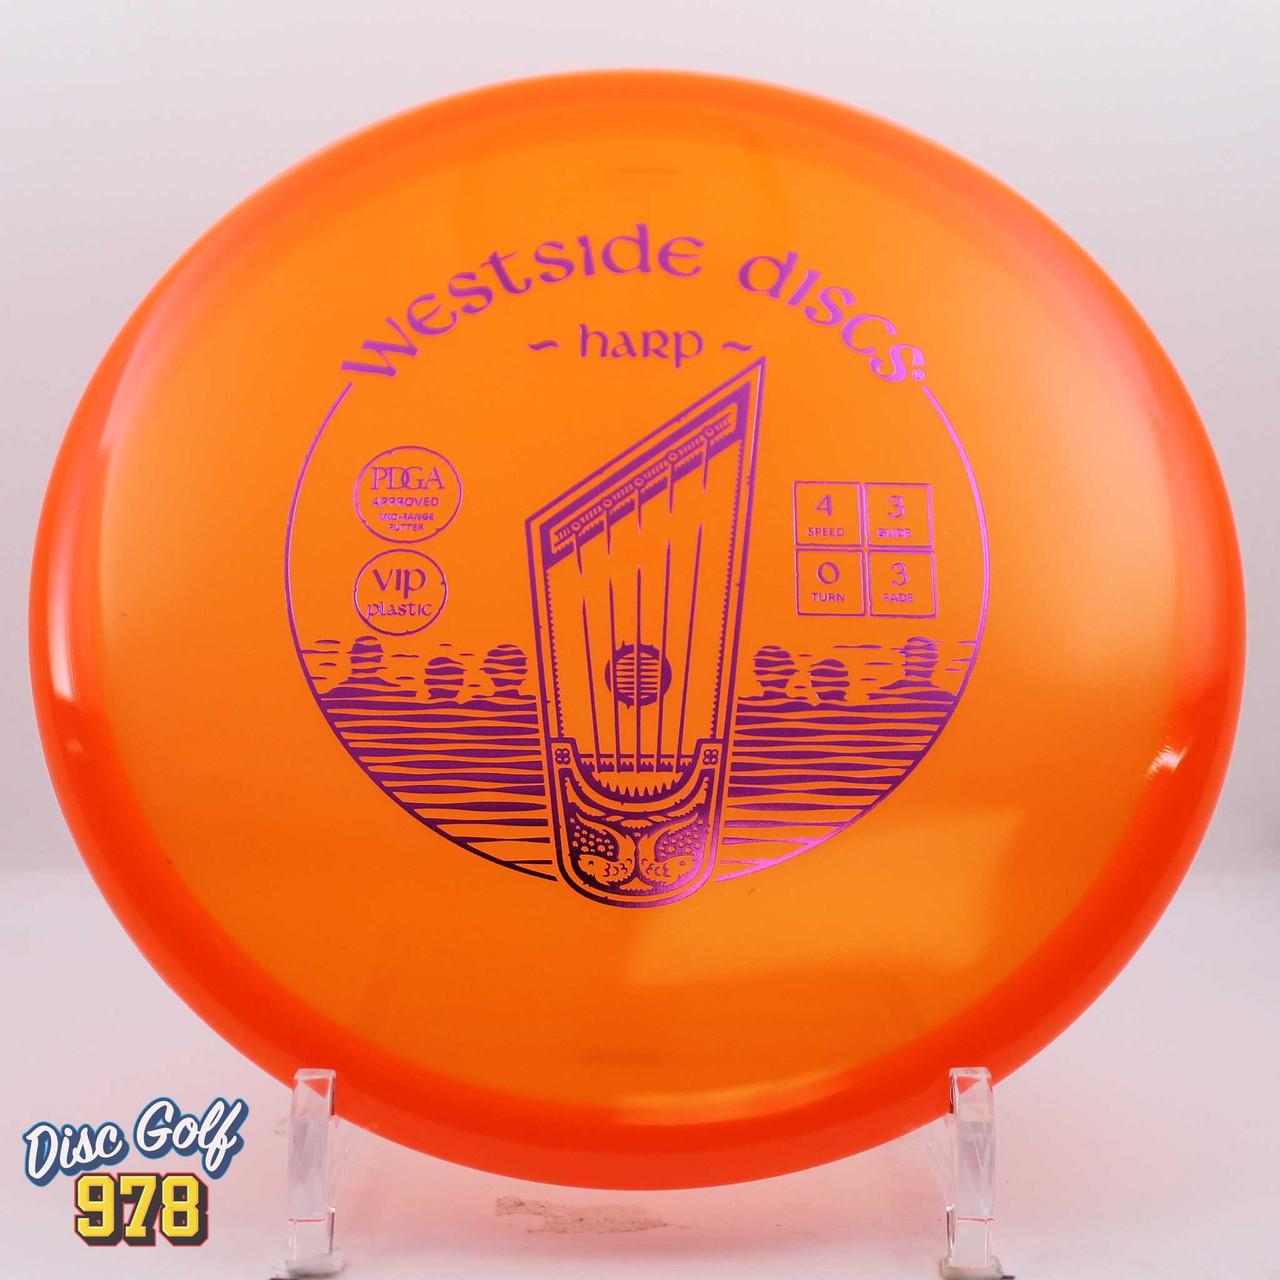 Westside Harp VIP Orange-Purple d 177.3g